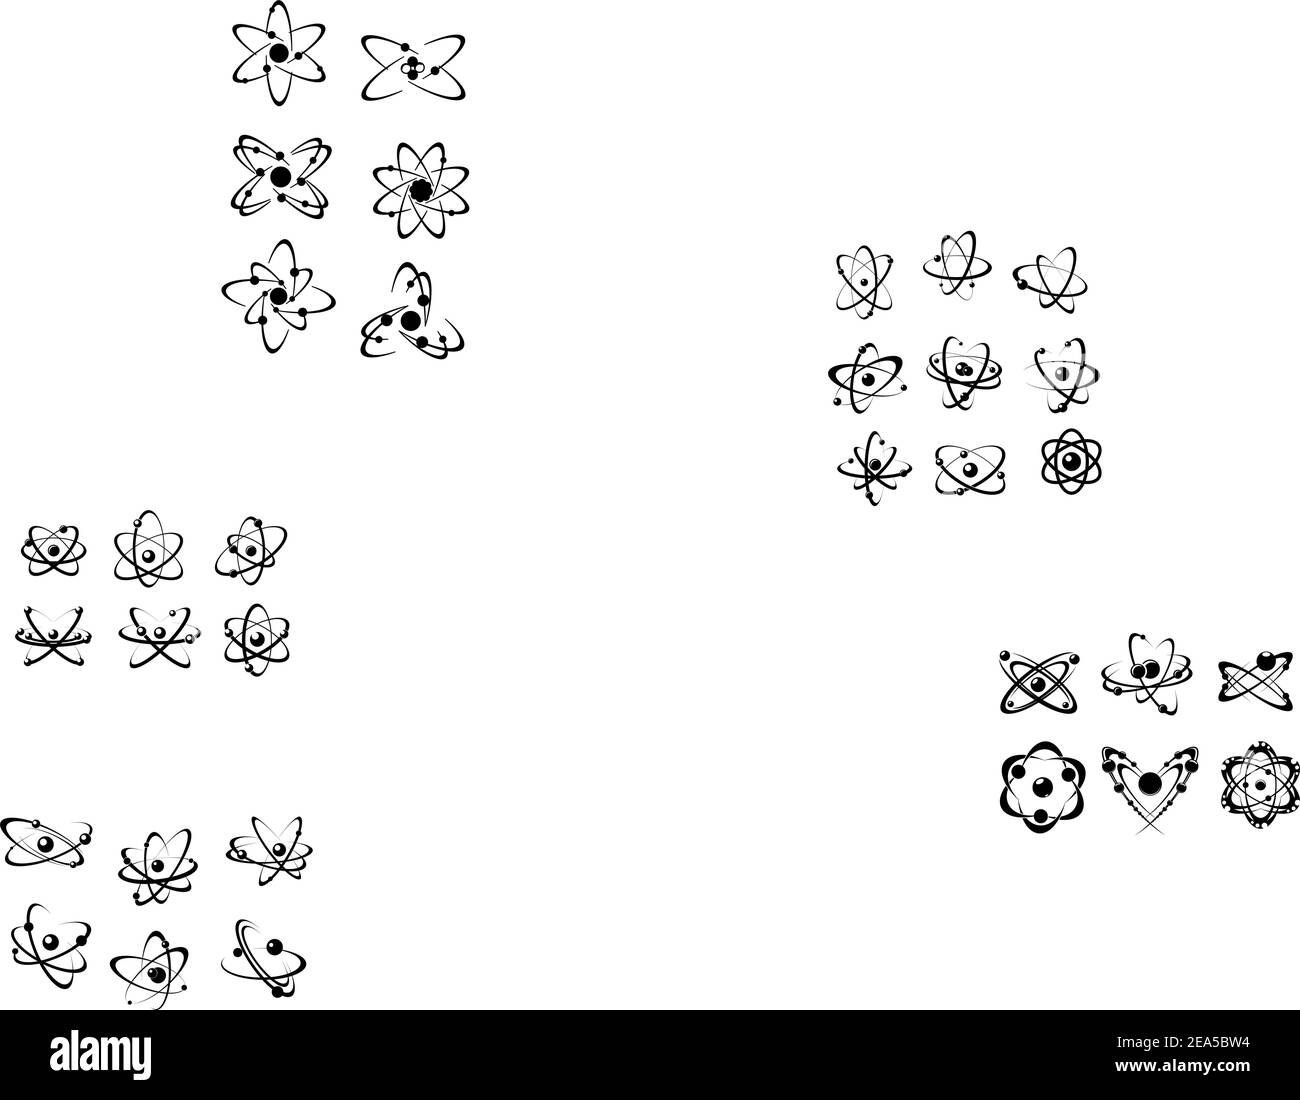 Moleküle und Atome Symbole für Science Concept Design Stock Vektor